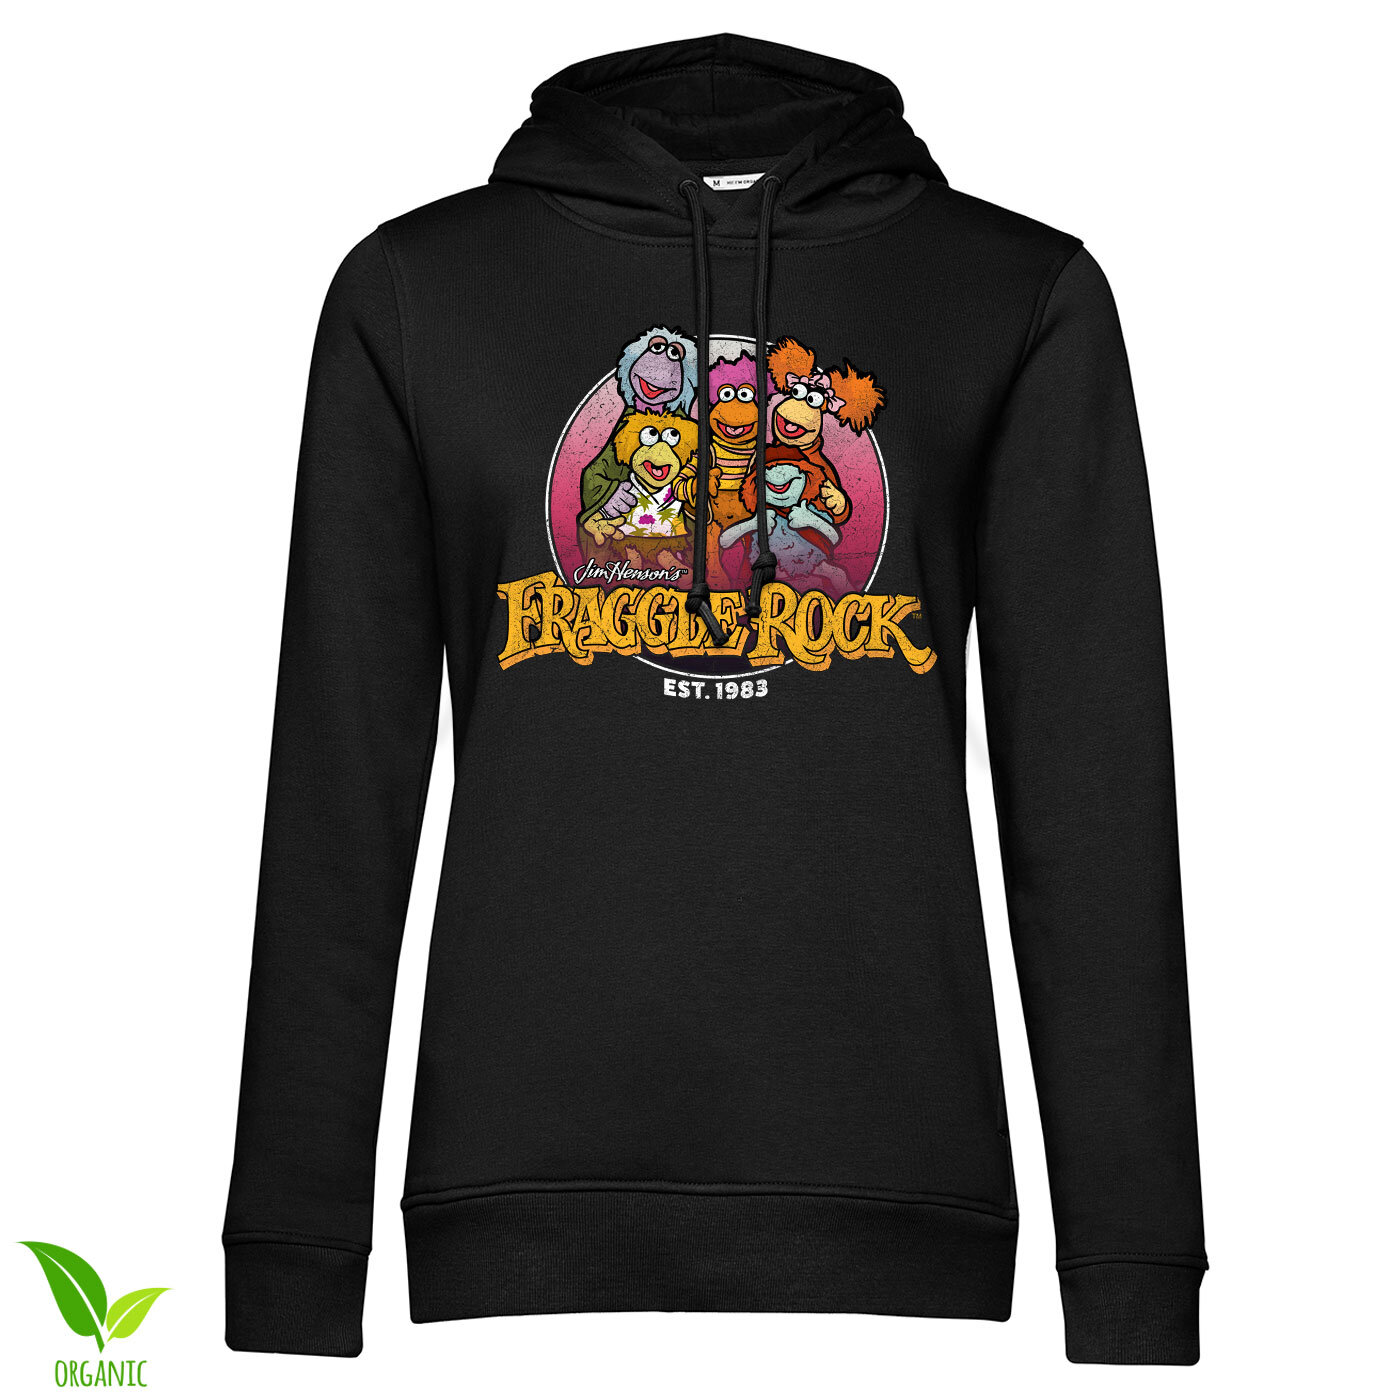 Fraggle Rock - Since 1983 Girls Hoodie